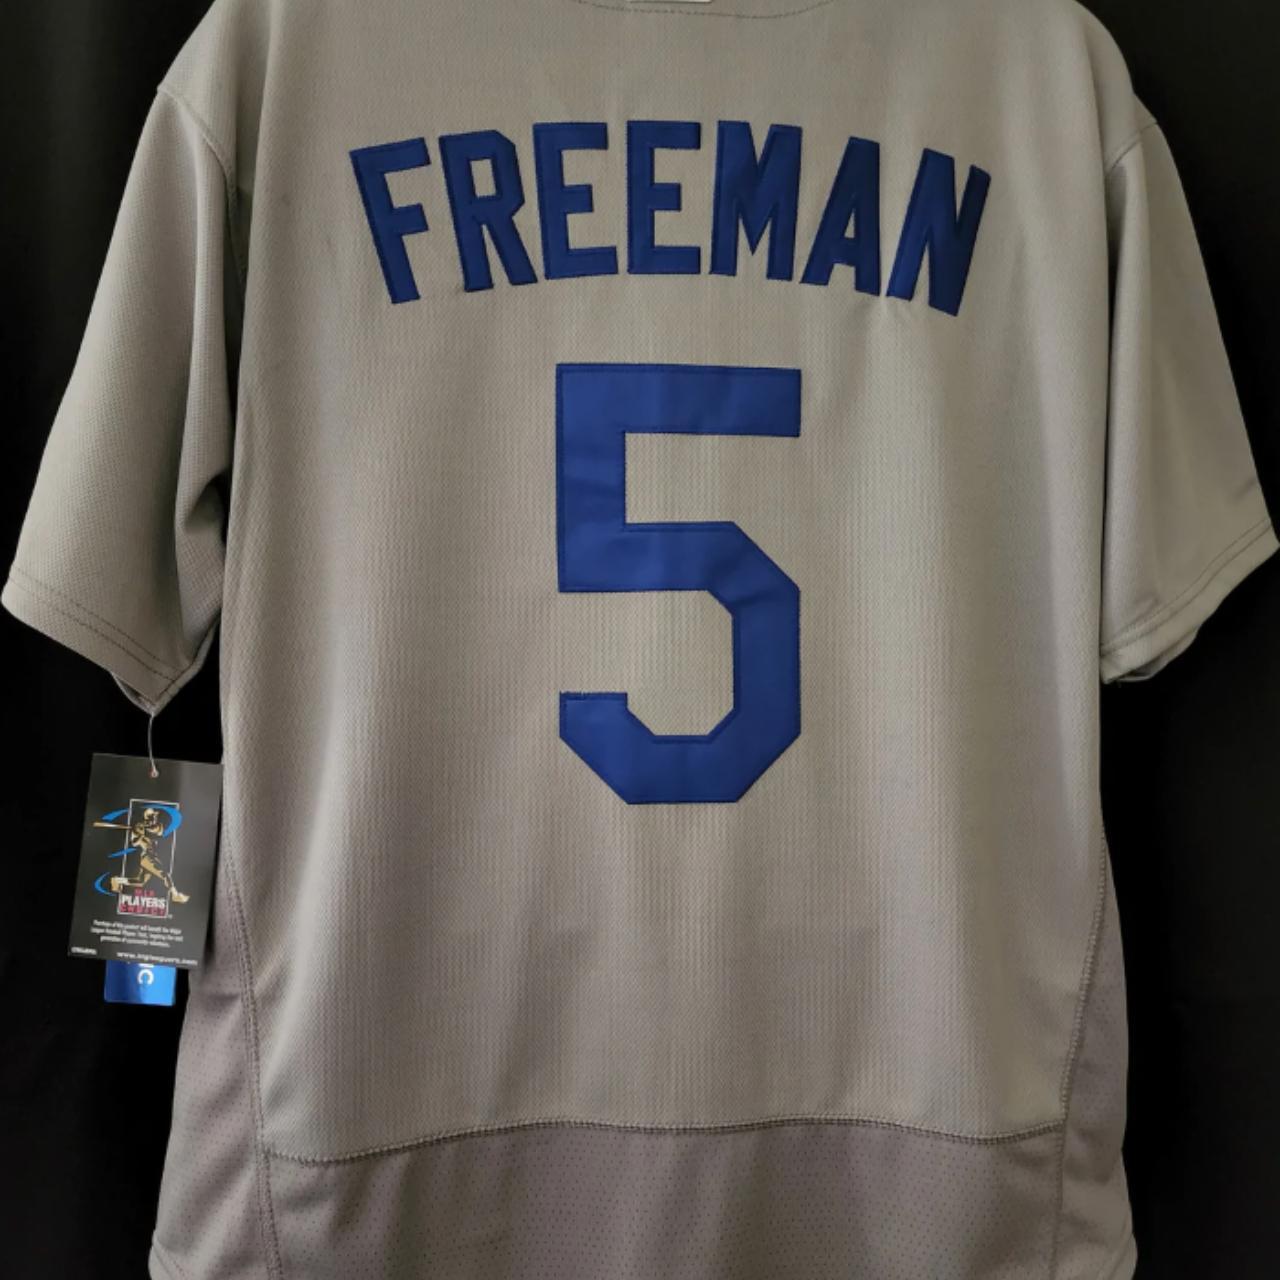 Welcome To LA Dodgers Freddie Freeman T-Shirt Gift - Depop